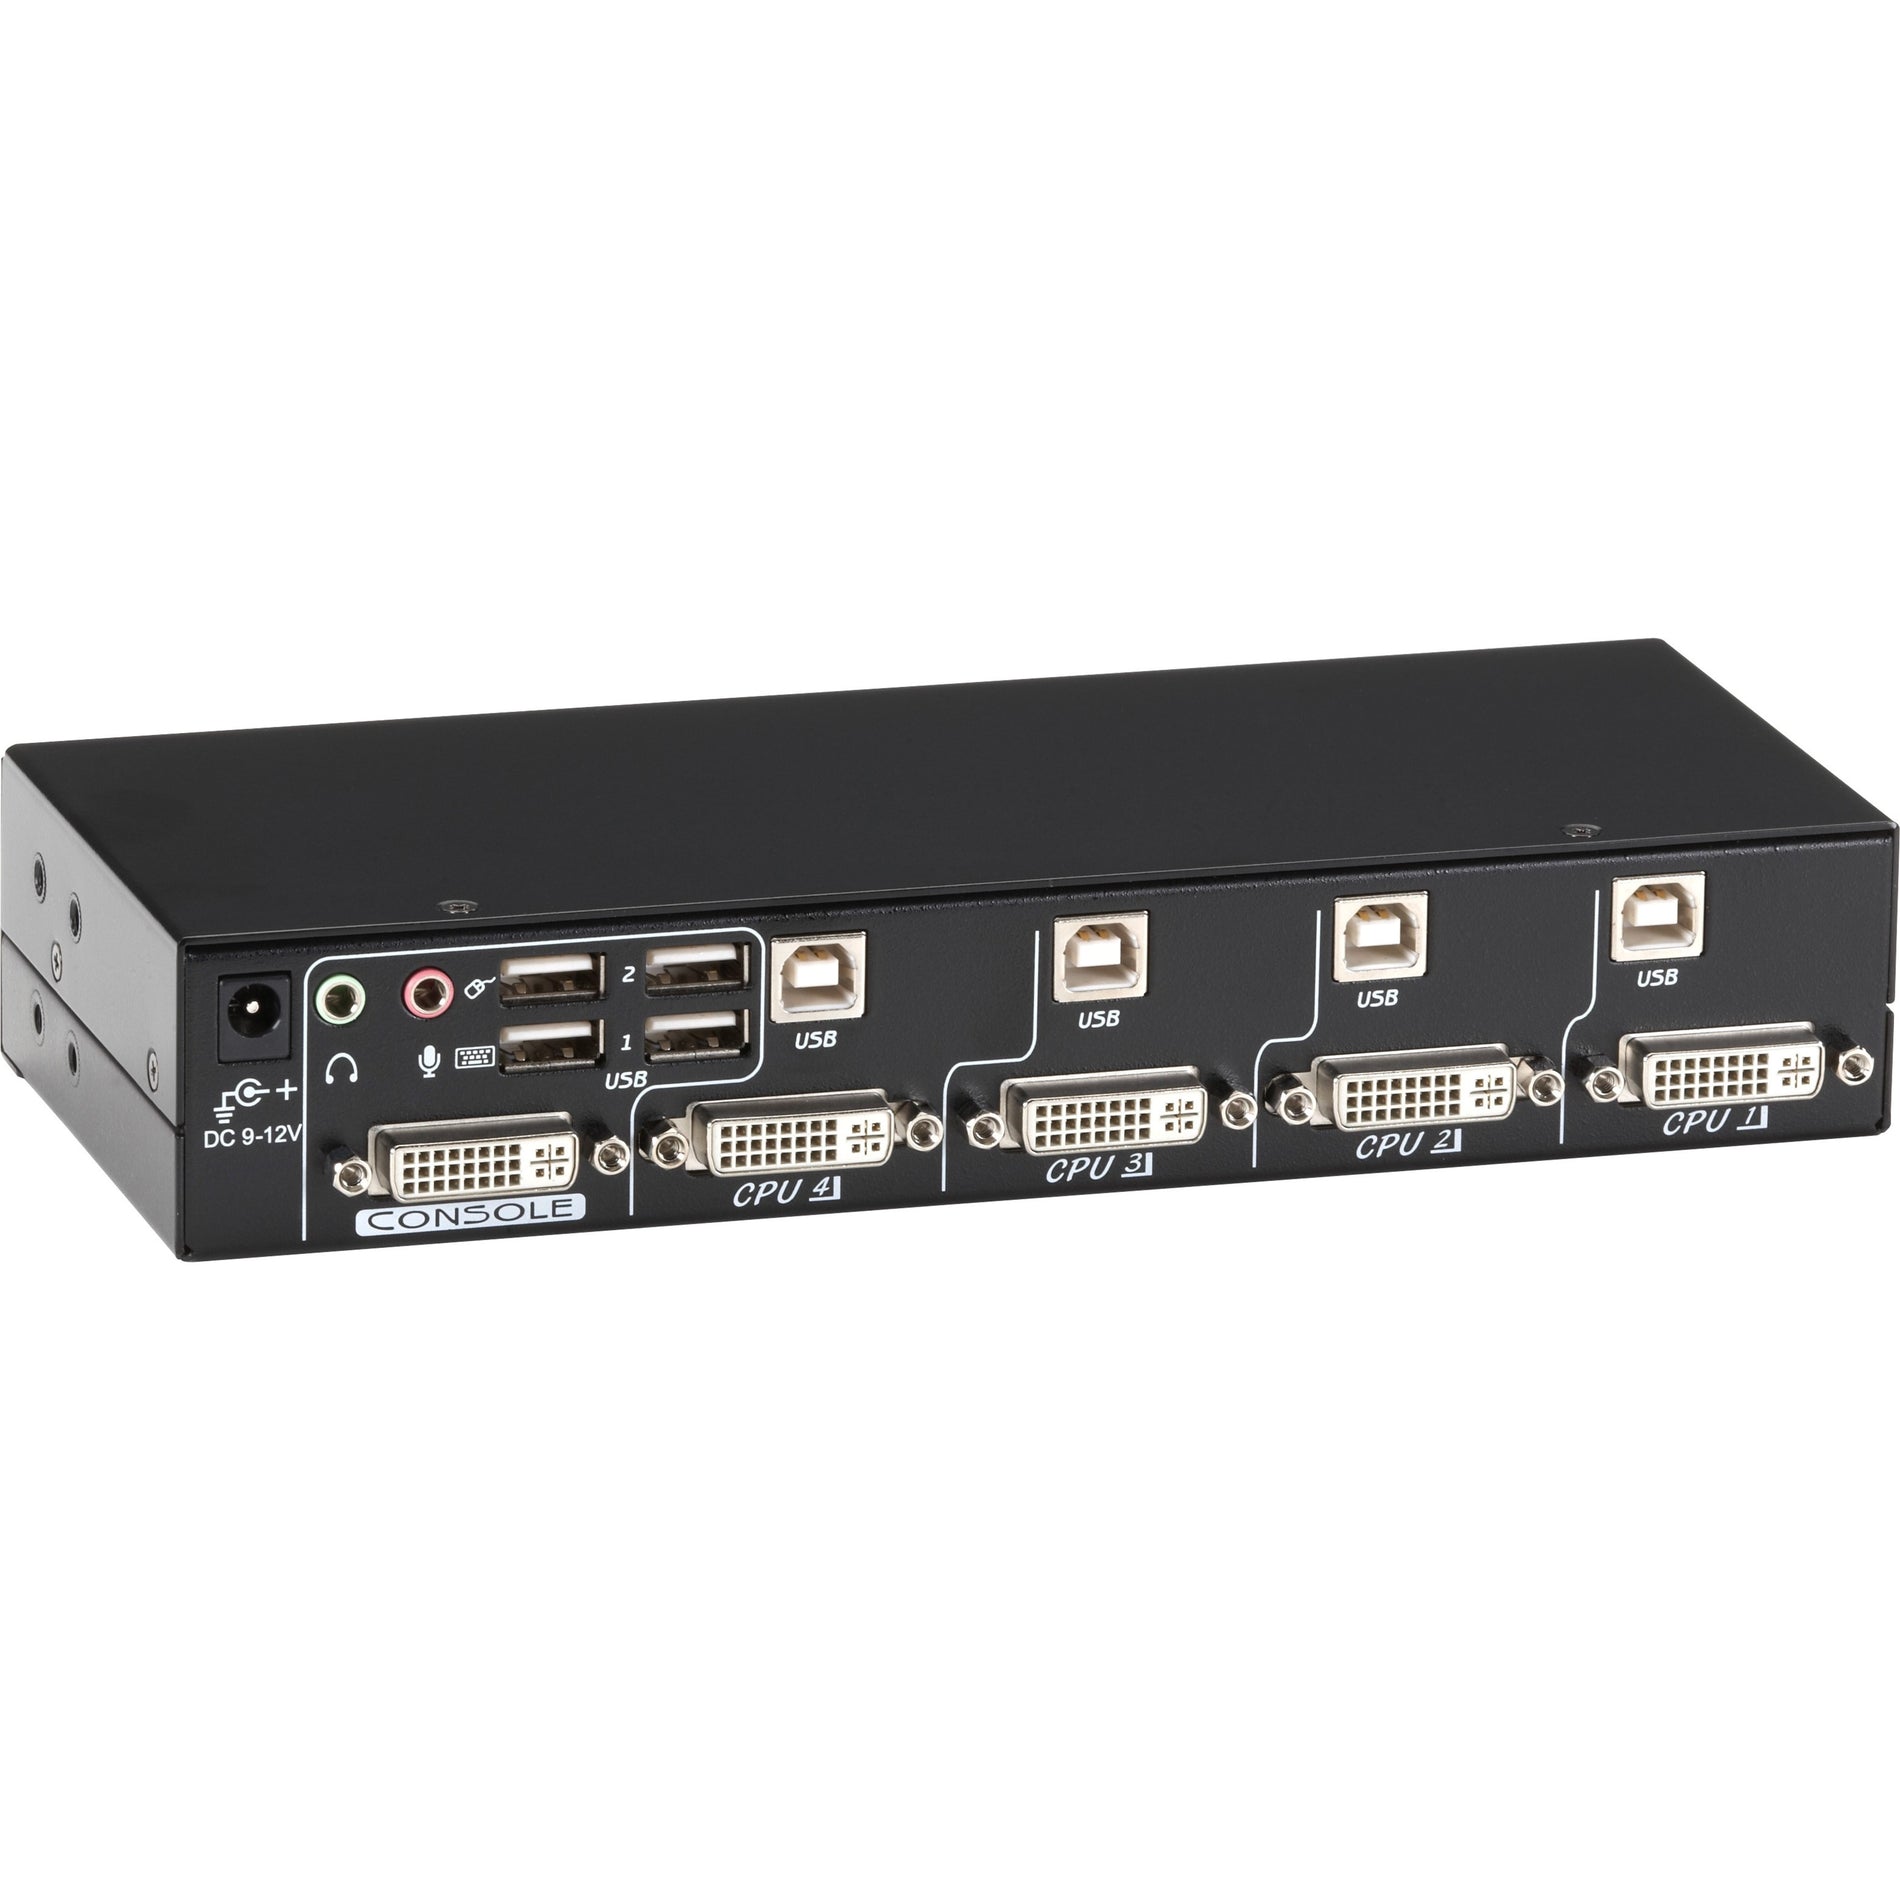 Black Box KV9634A ServSwitch DT DVI with Bidirectional Audio, 4-Port KVM Switchbox